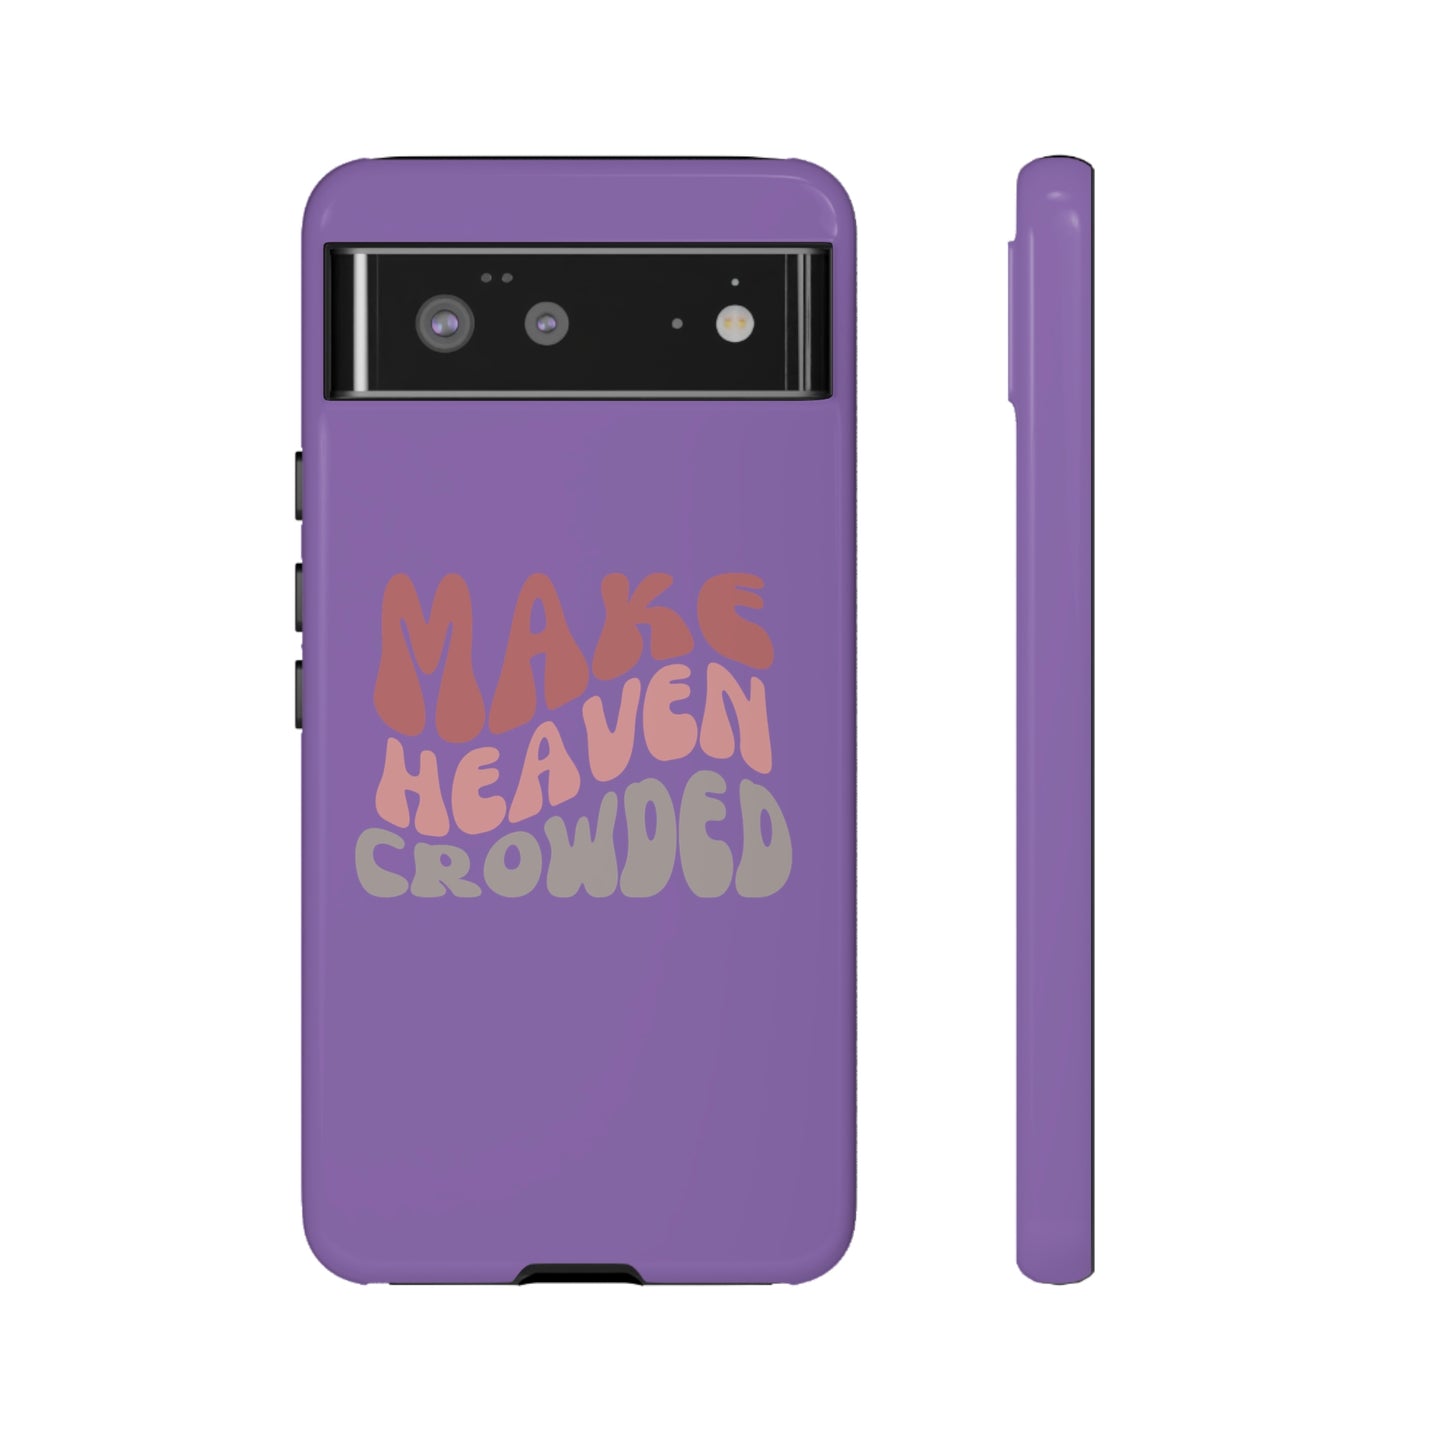 Make Heaven Crowded, Phone Cases